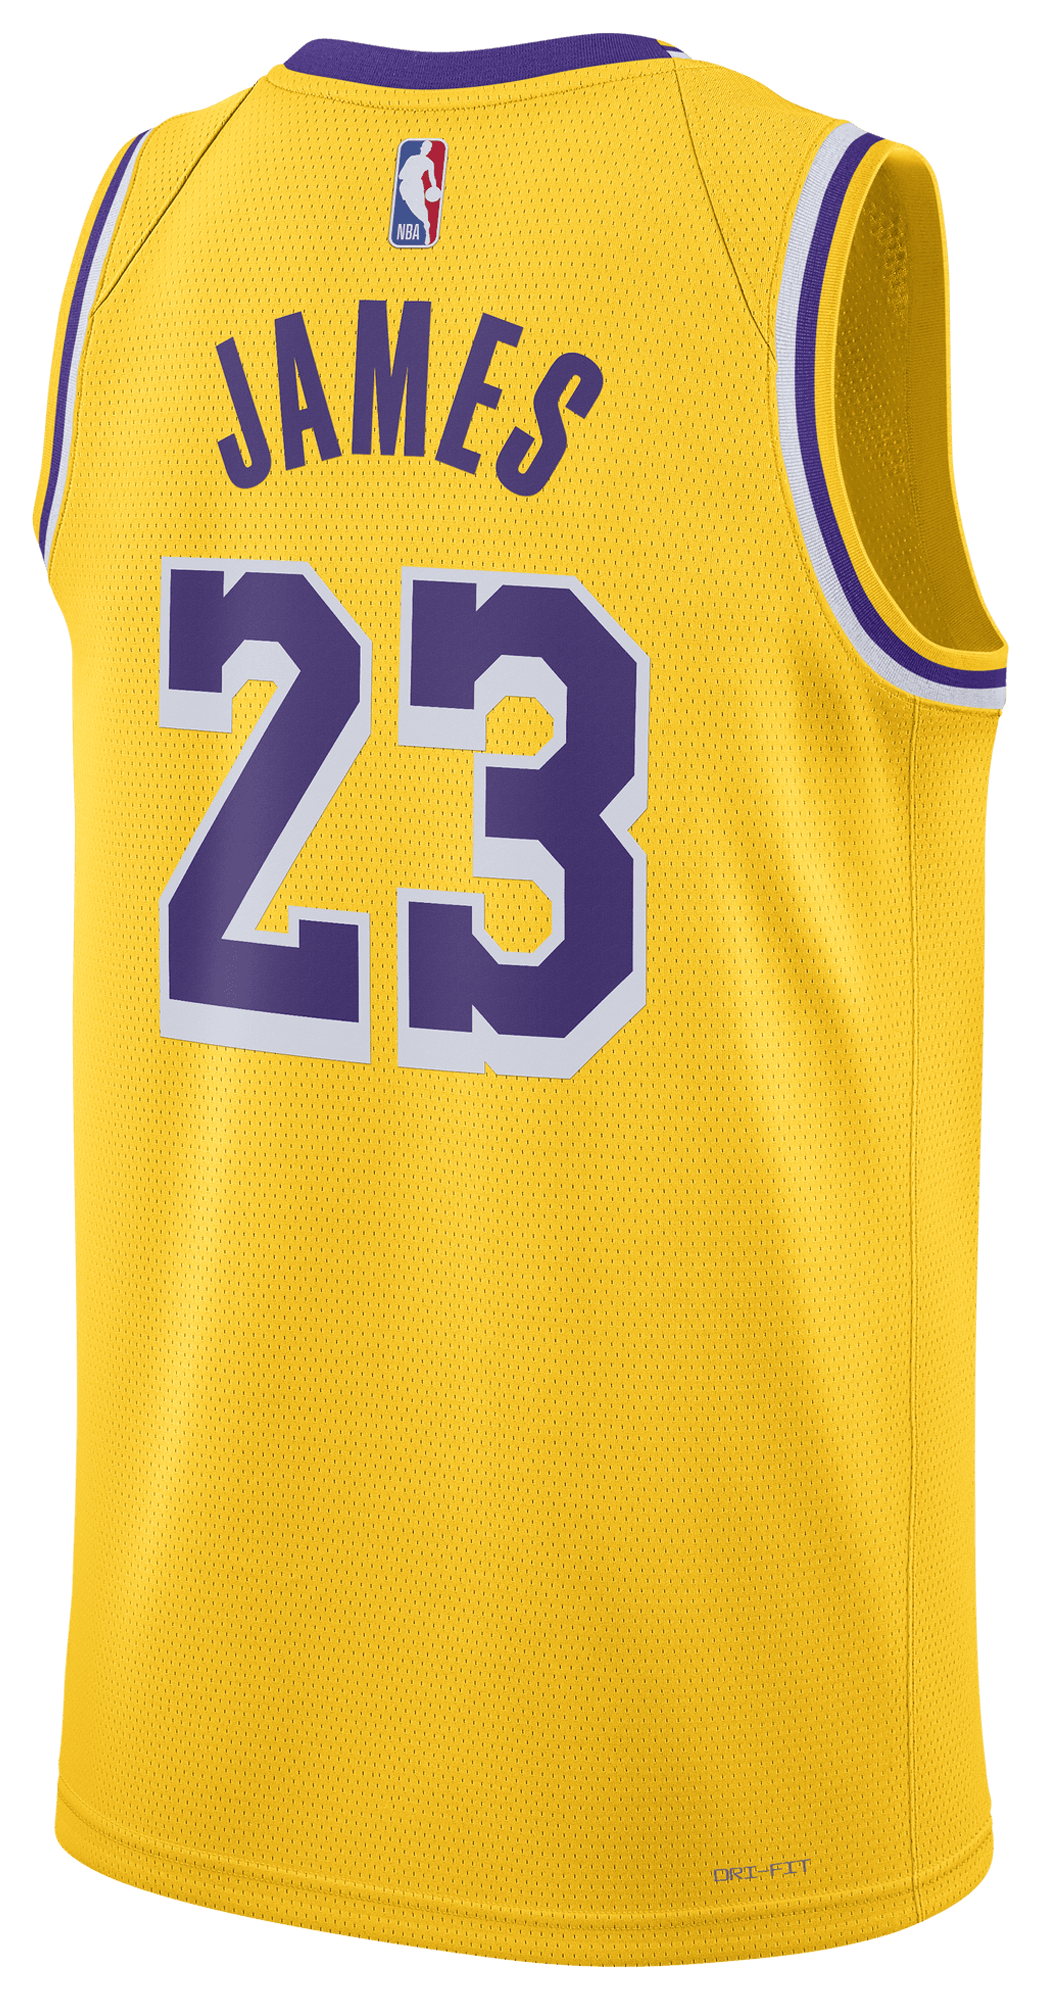 Nike Lakers Dri-FIT Swingman Icon Jersey